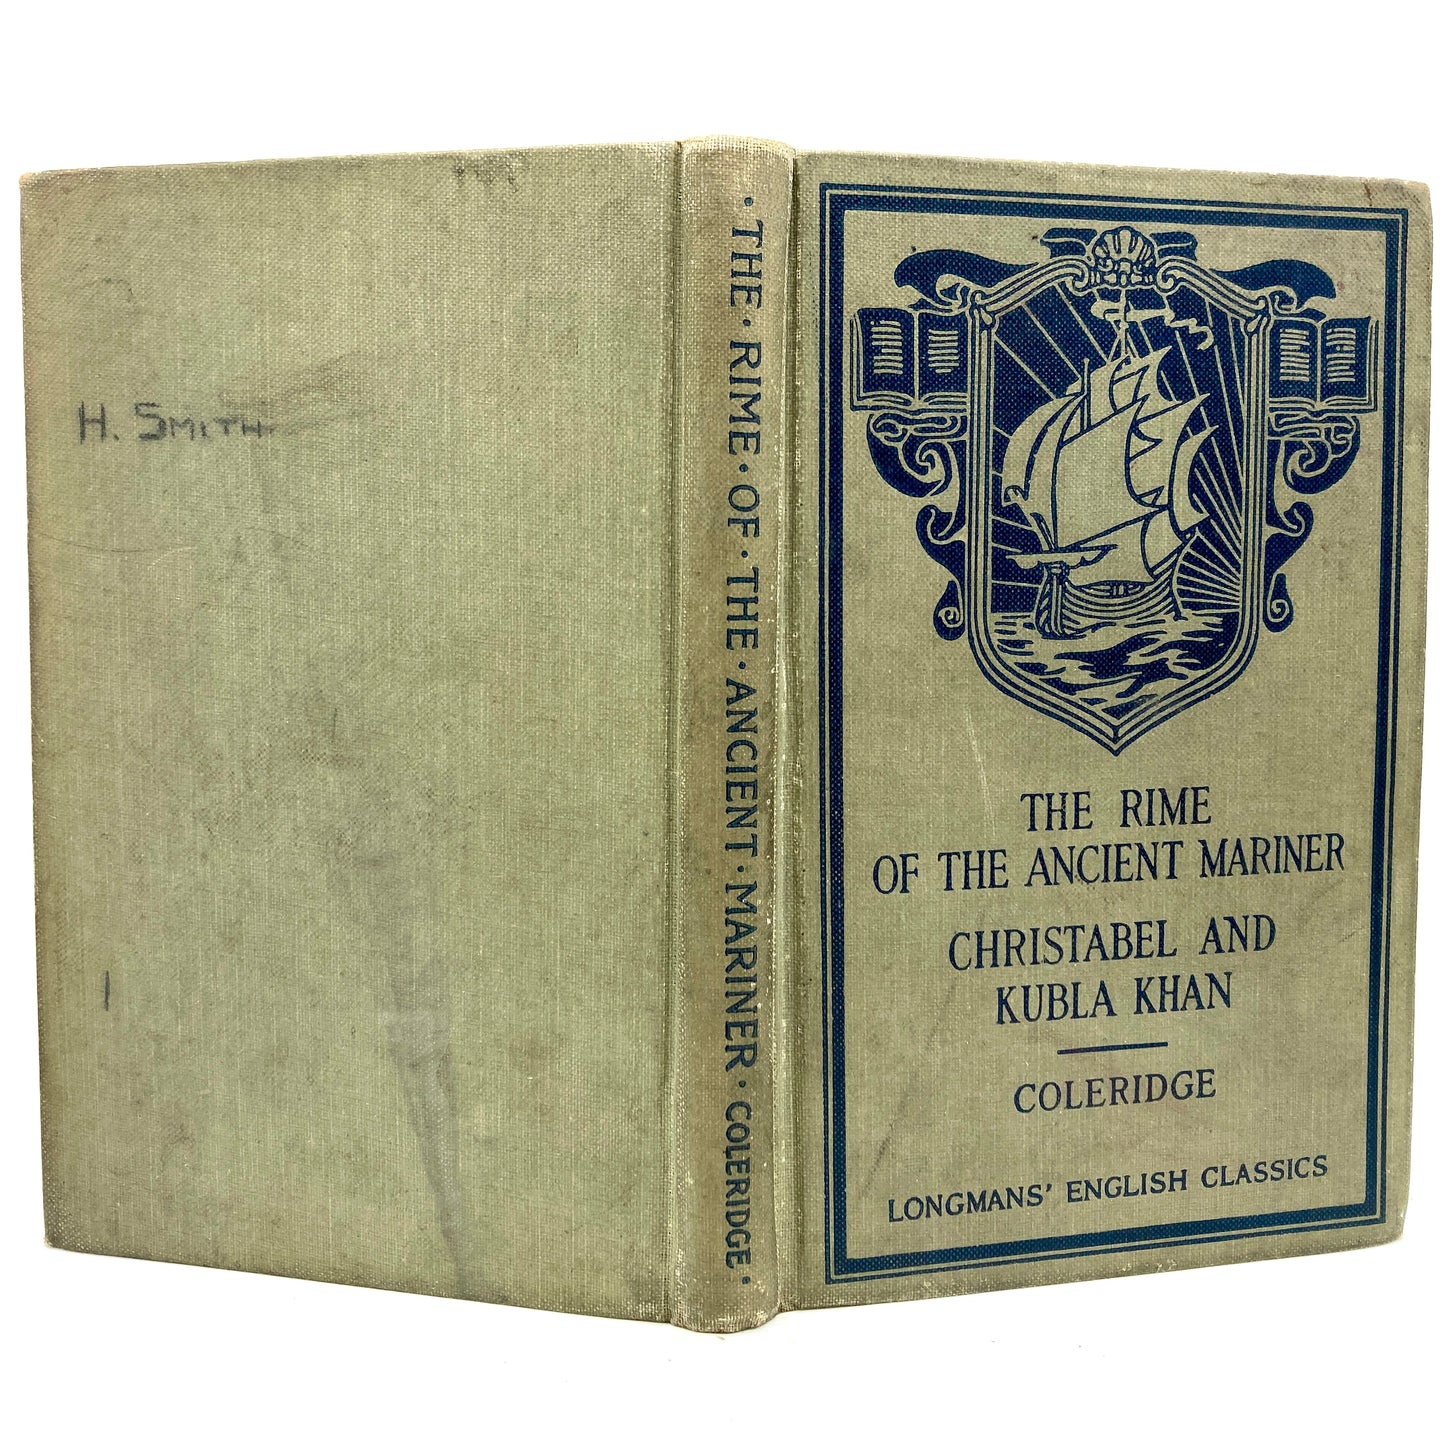 COLERDIGE, Samuel Taylor "The Rime of the Ancient Mariner" [Longman's English Classics, c1900]